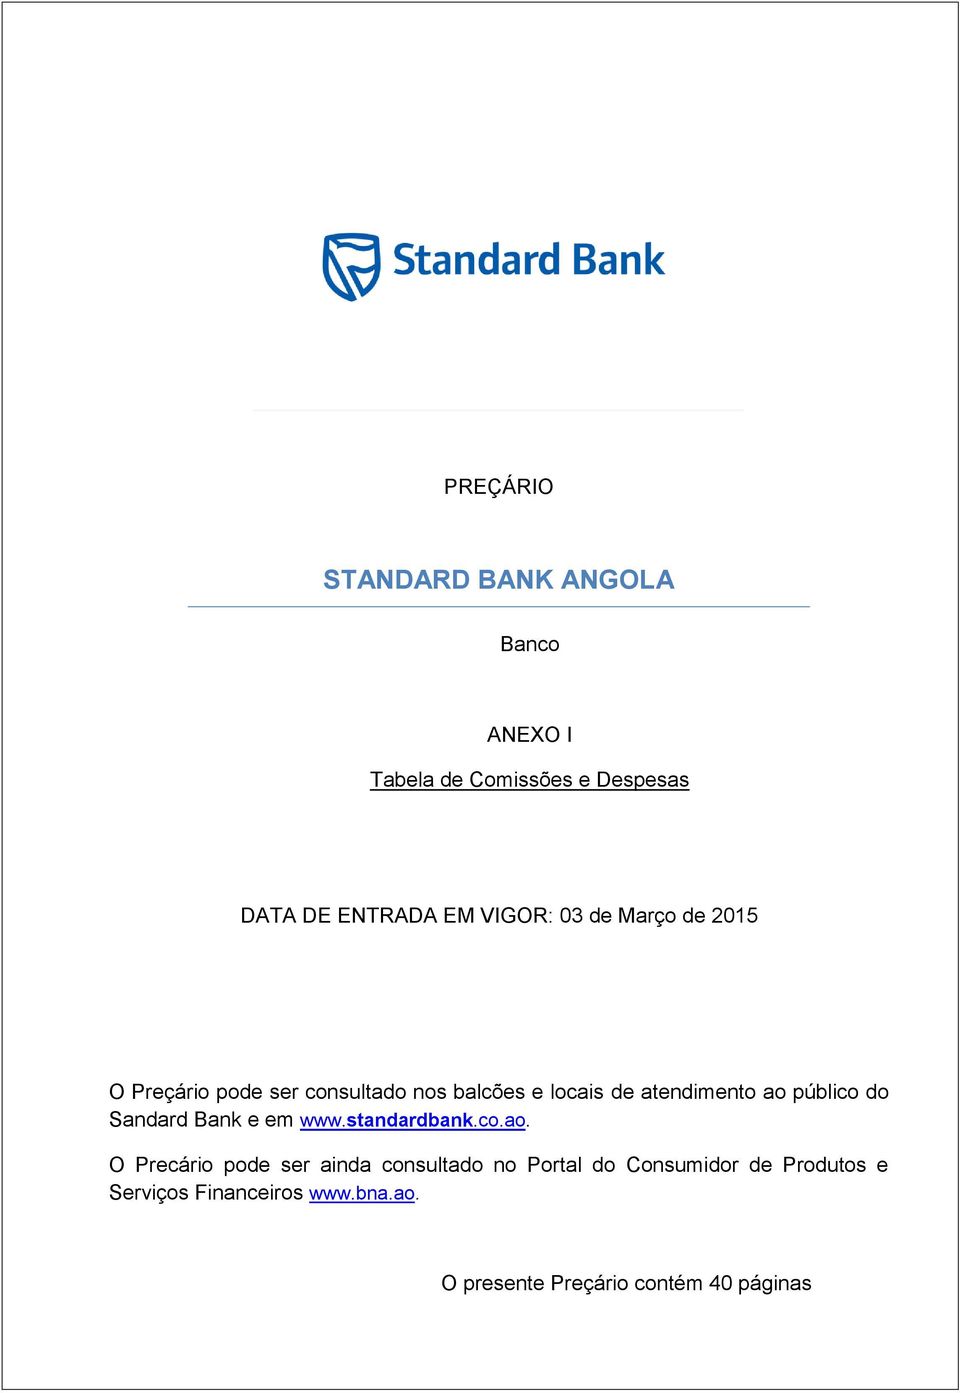 do Sandard Bank e em www.standardbank.co.ao.